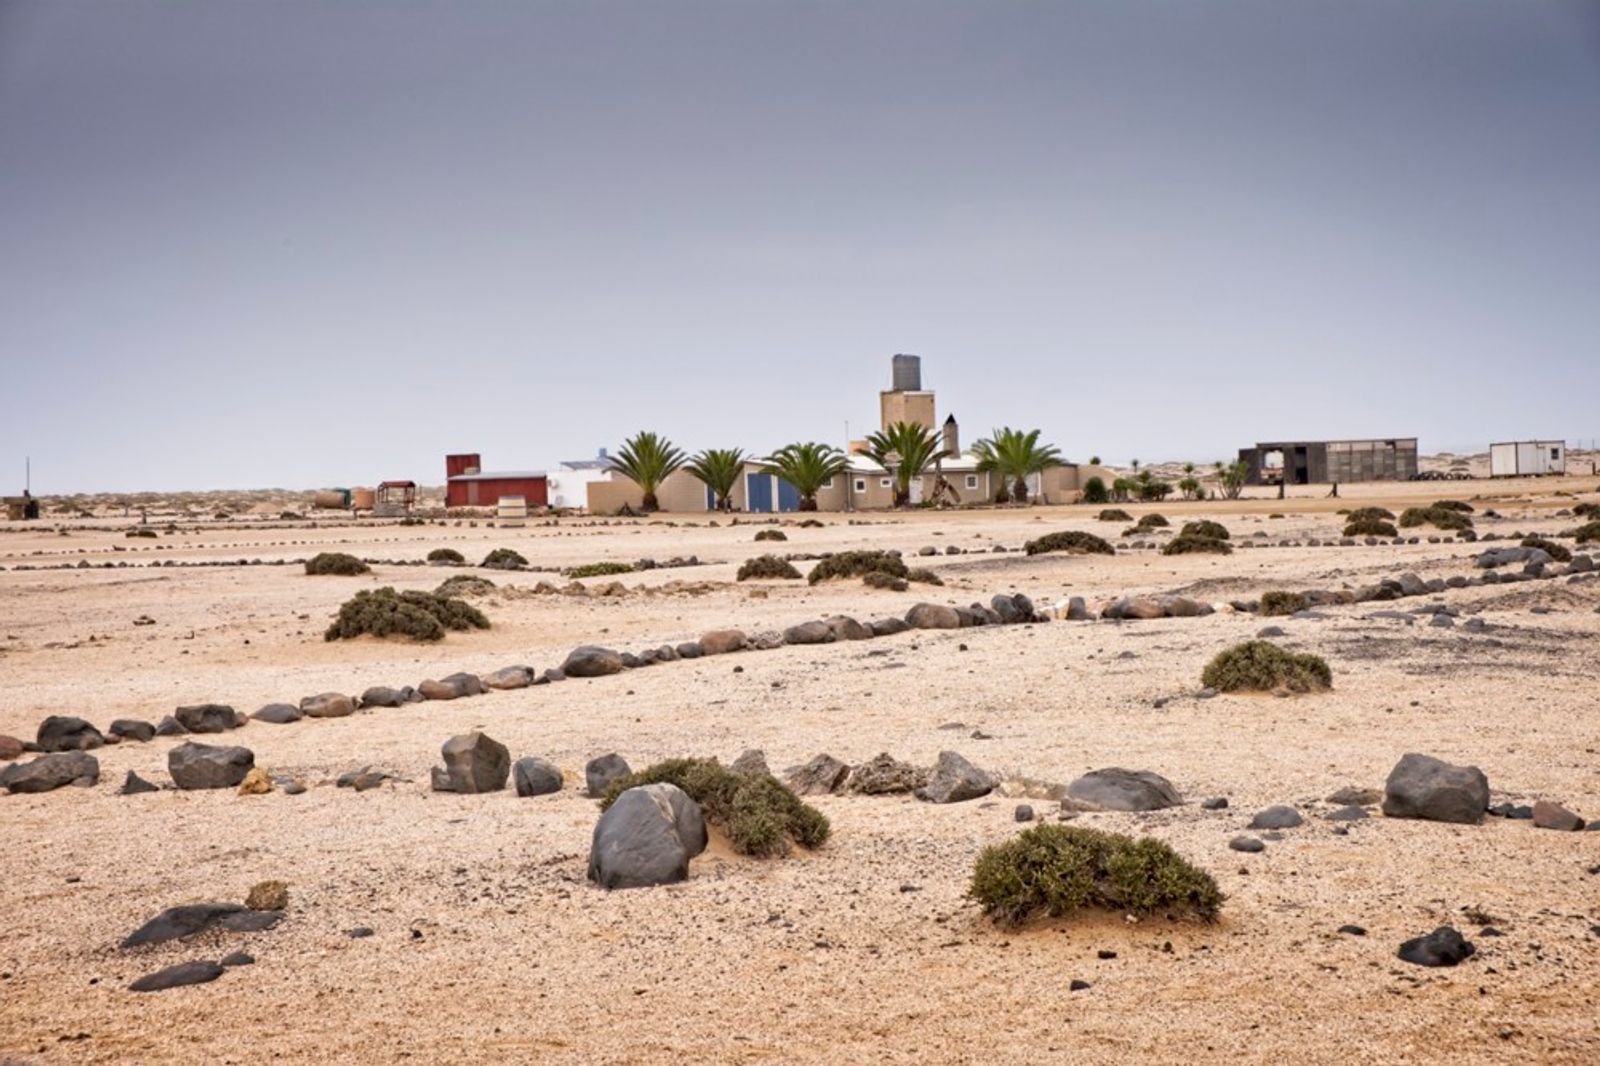 © Harris Steinman - Image from the Wlotzkasbaken, Namibia photography project